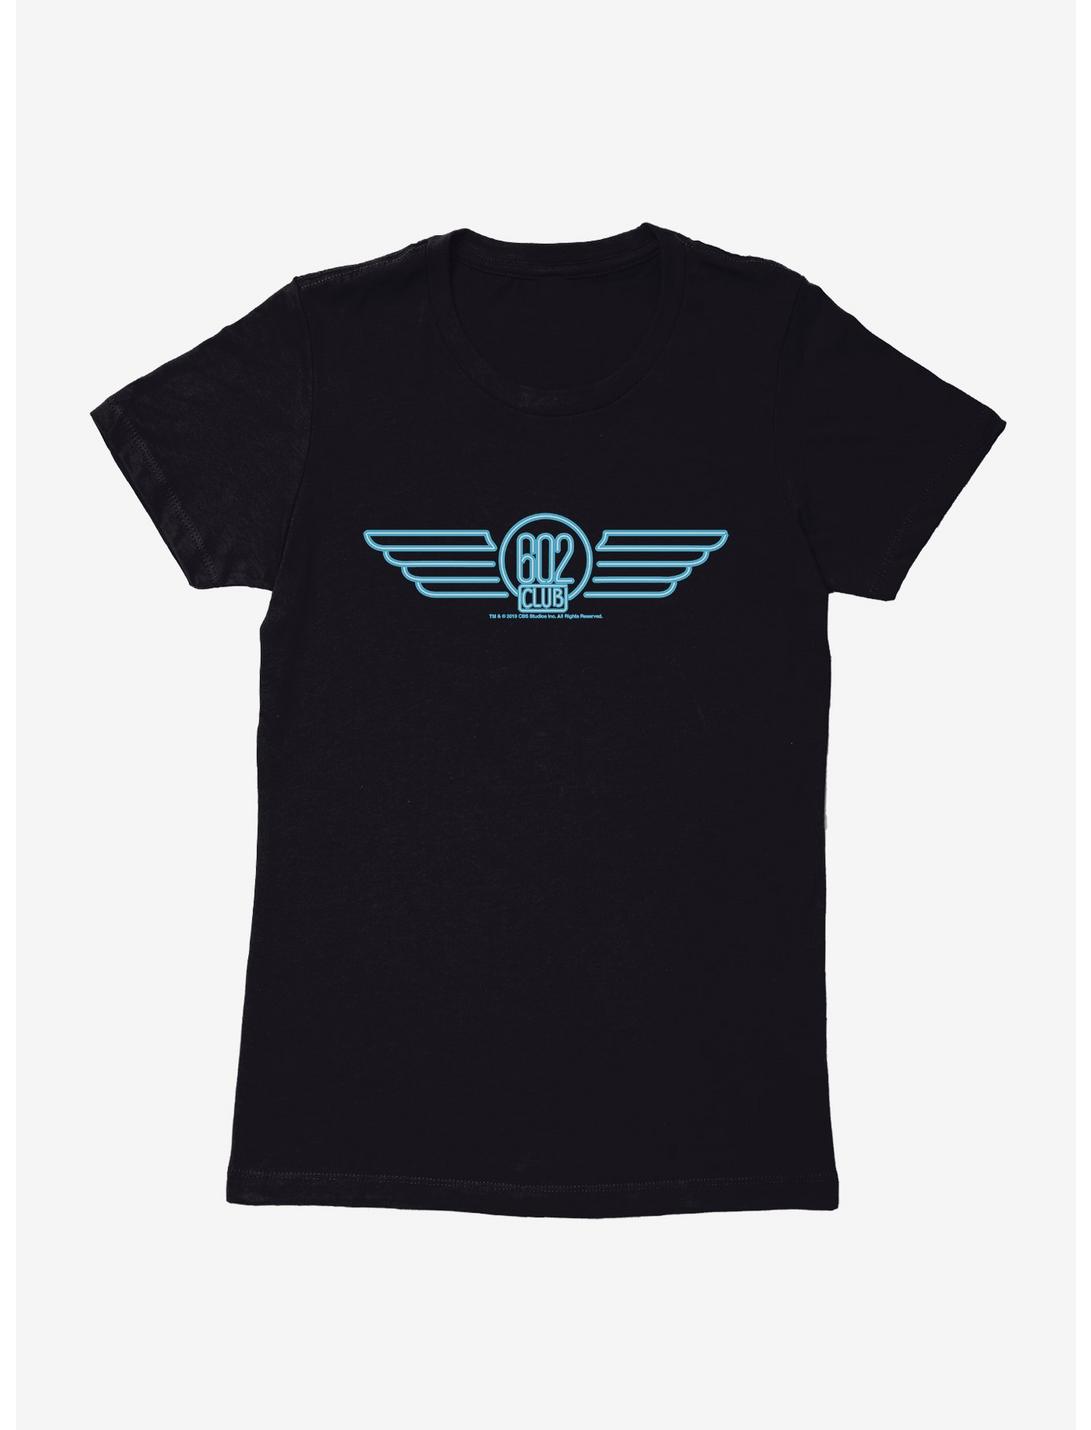 Star Trek 602 Club Neon Womens T-Shirt, BLACK, hi-res